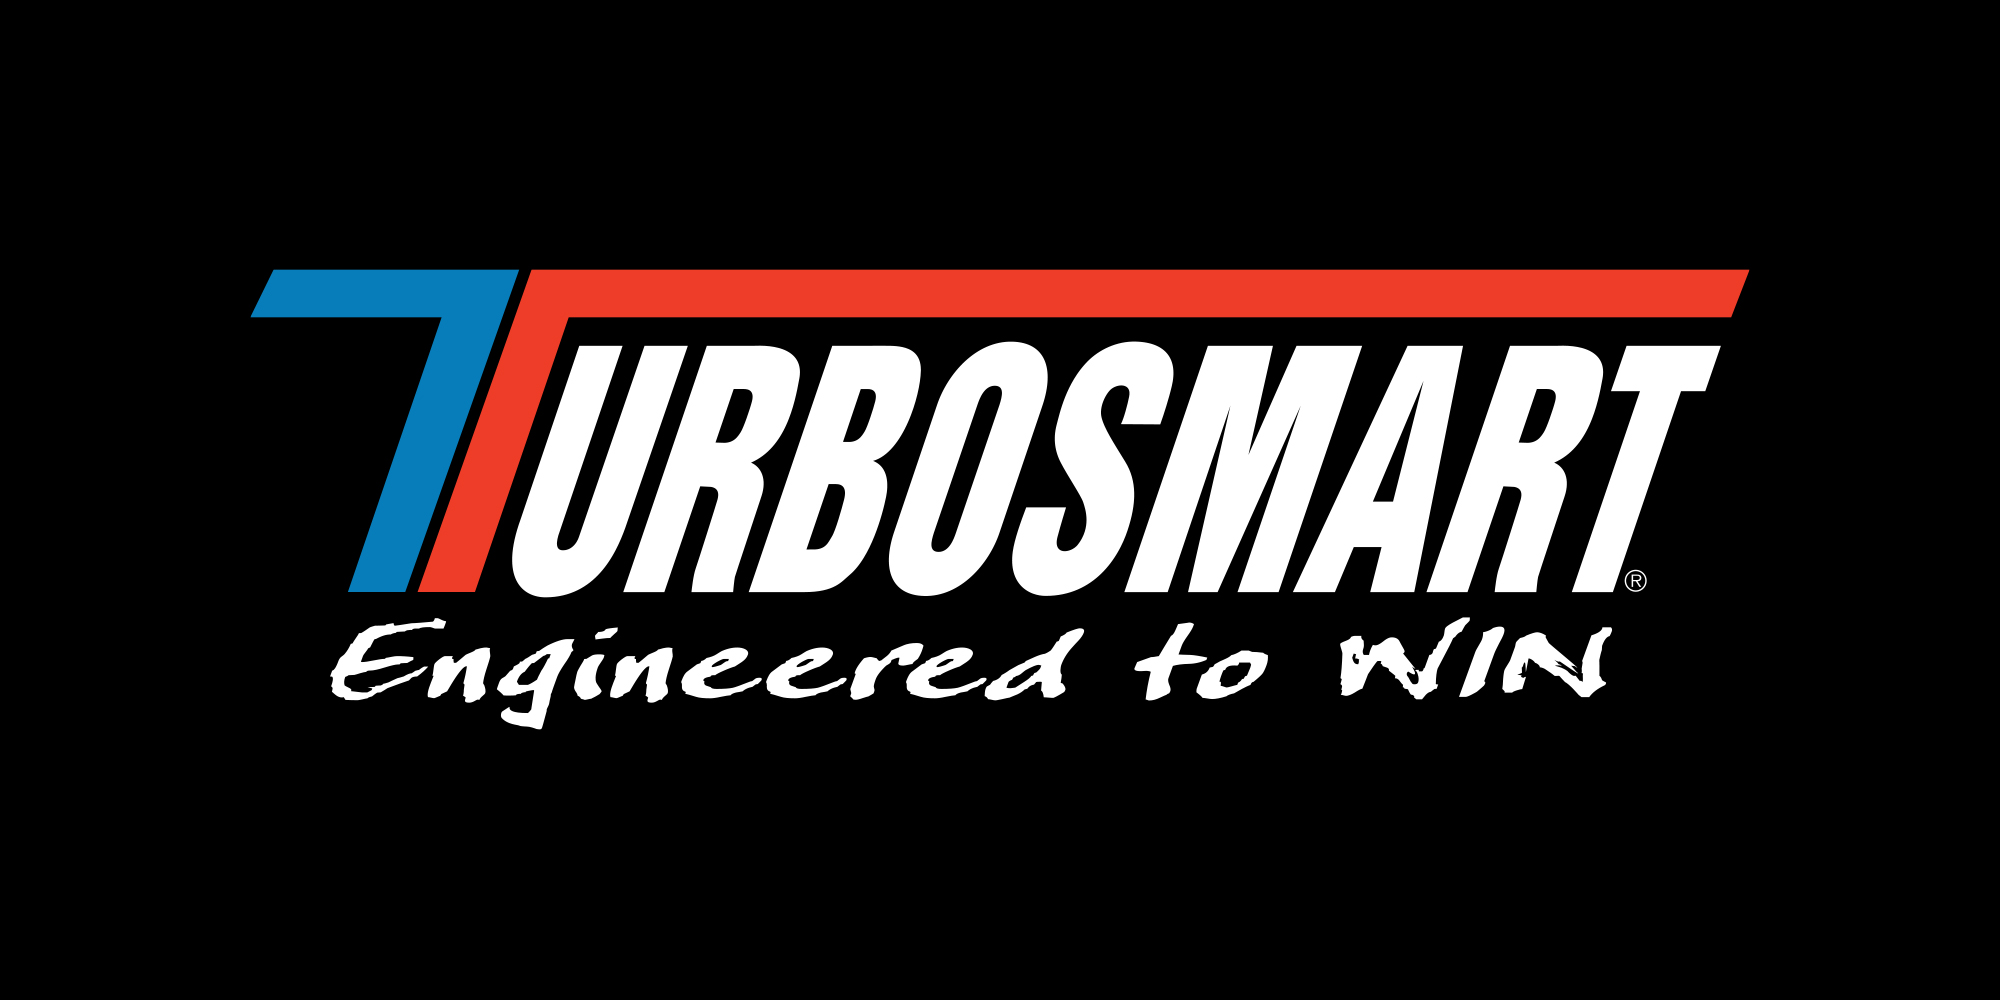 www.turbosmart.com